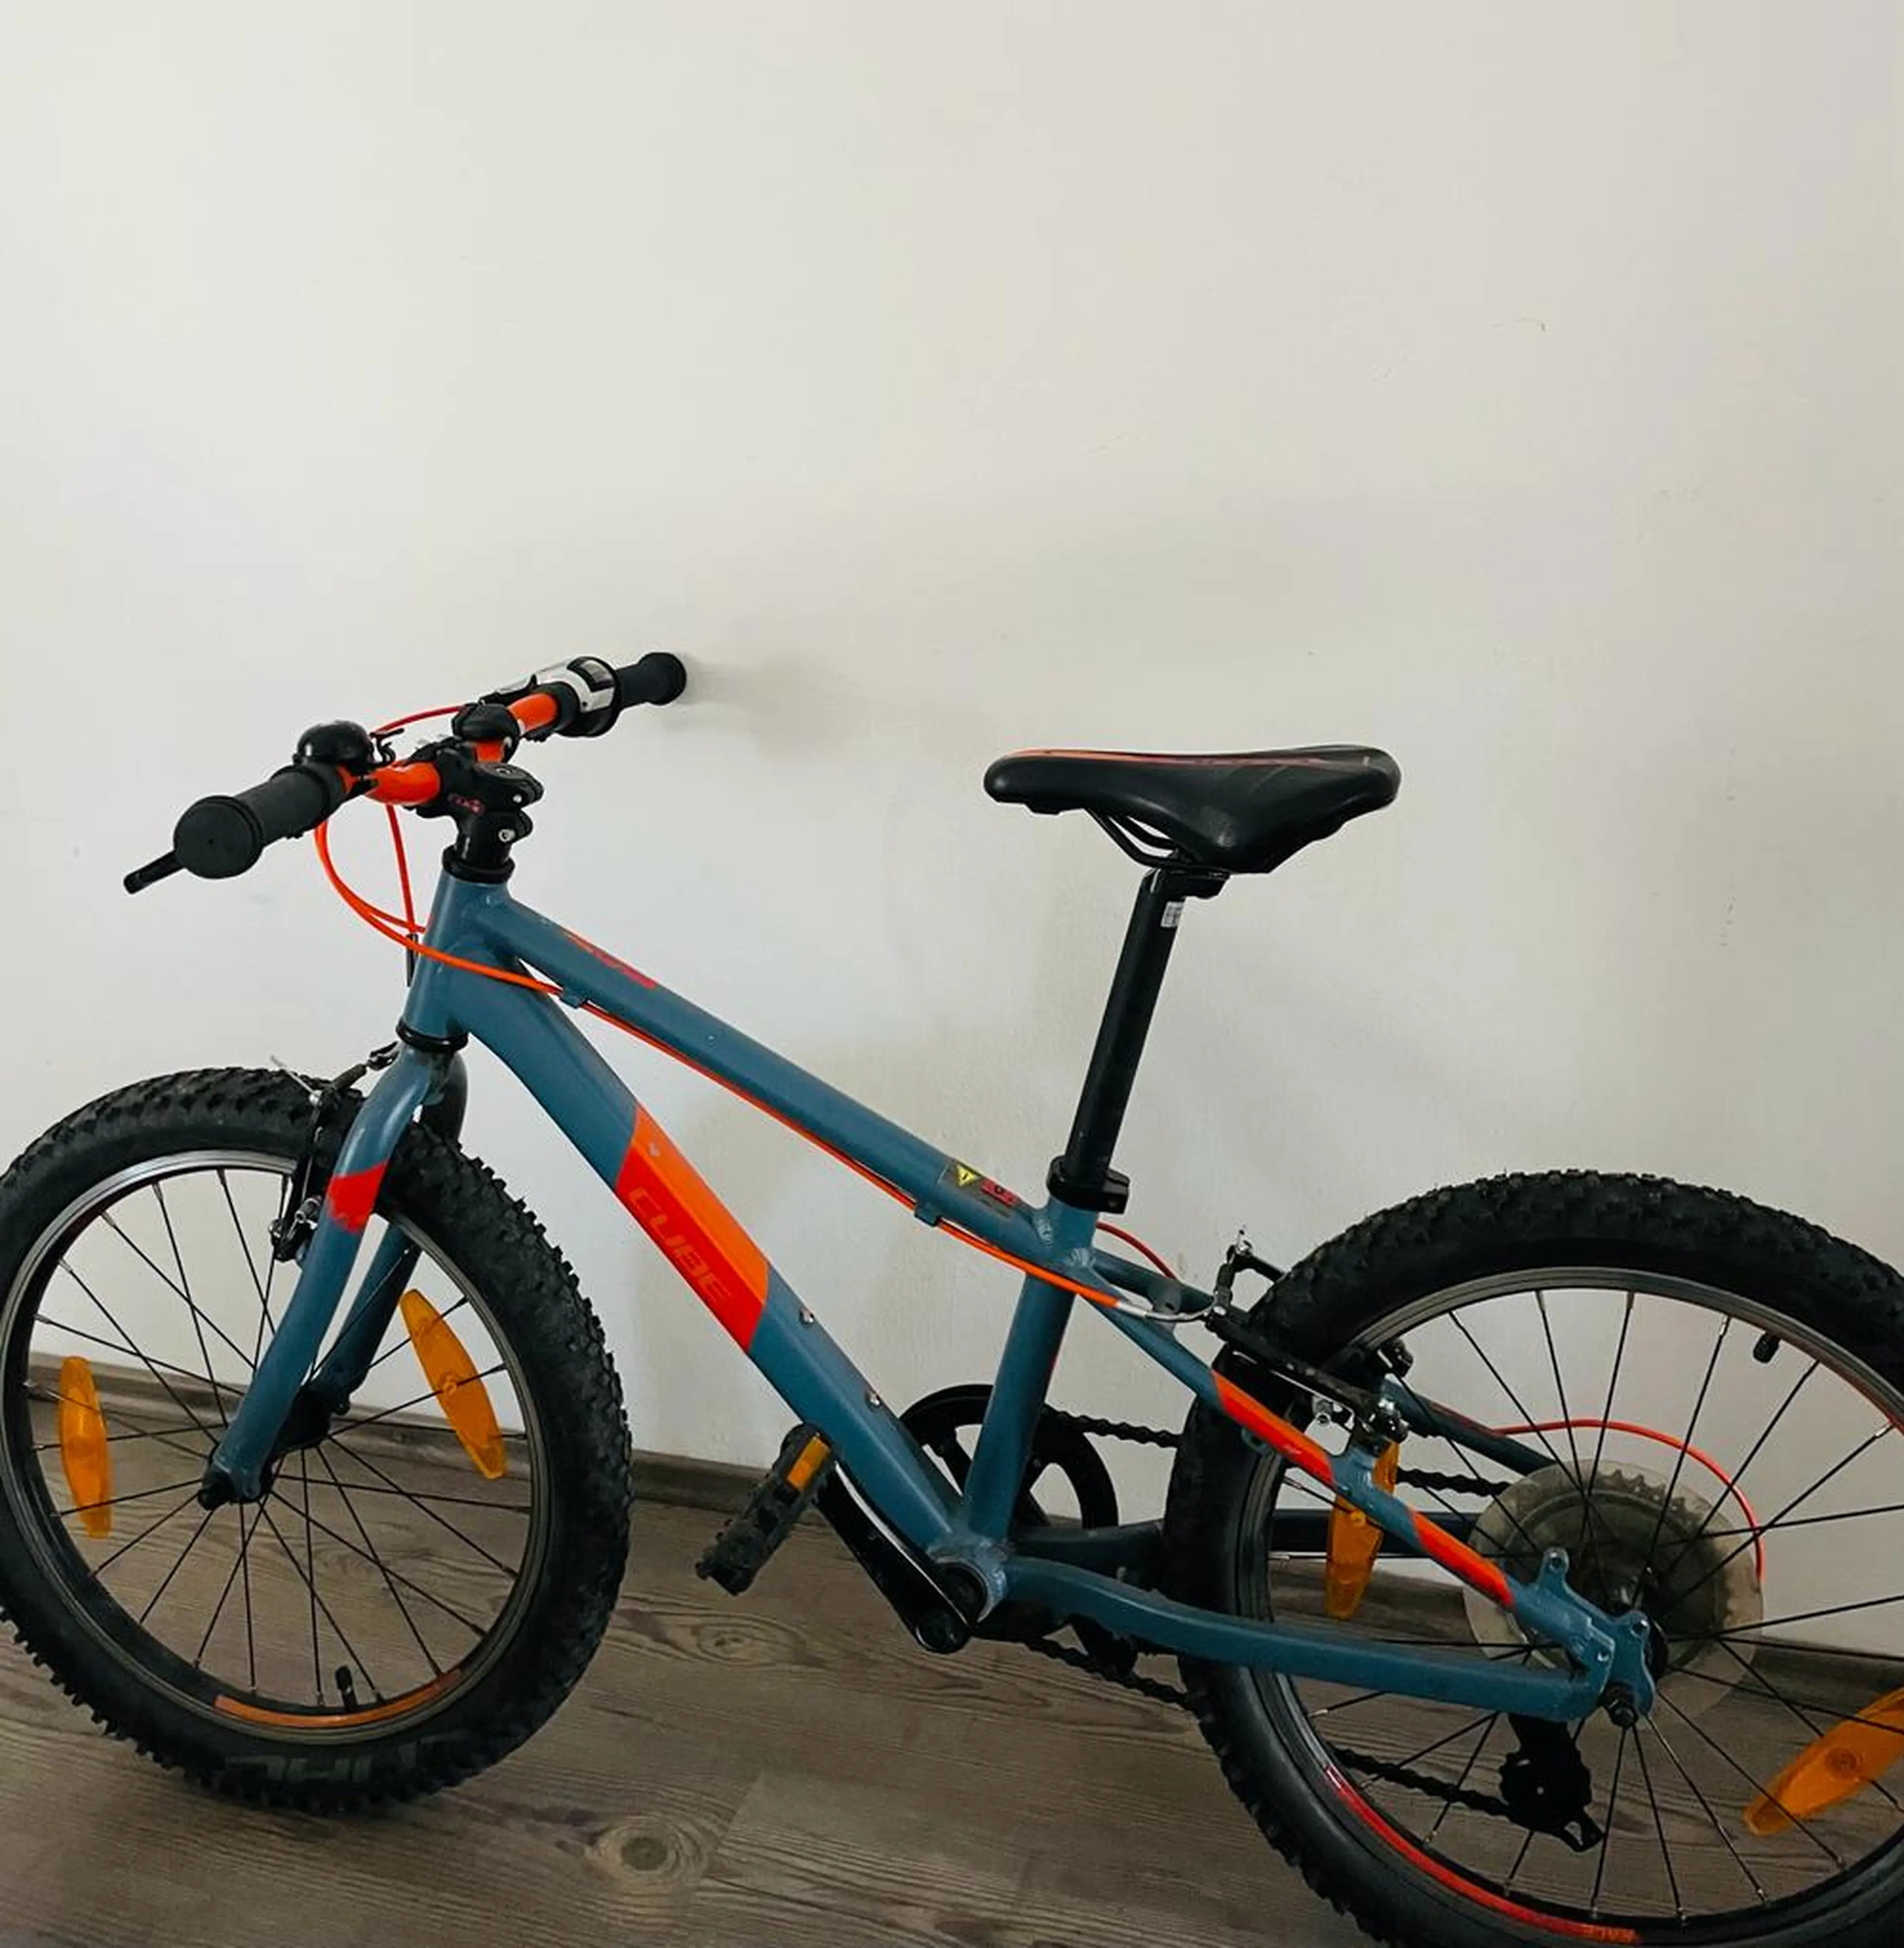 1. Vand Bicicleta Cube Acid 200, 20 inch, Grey - Orange